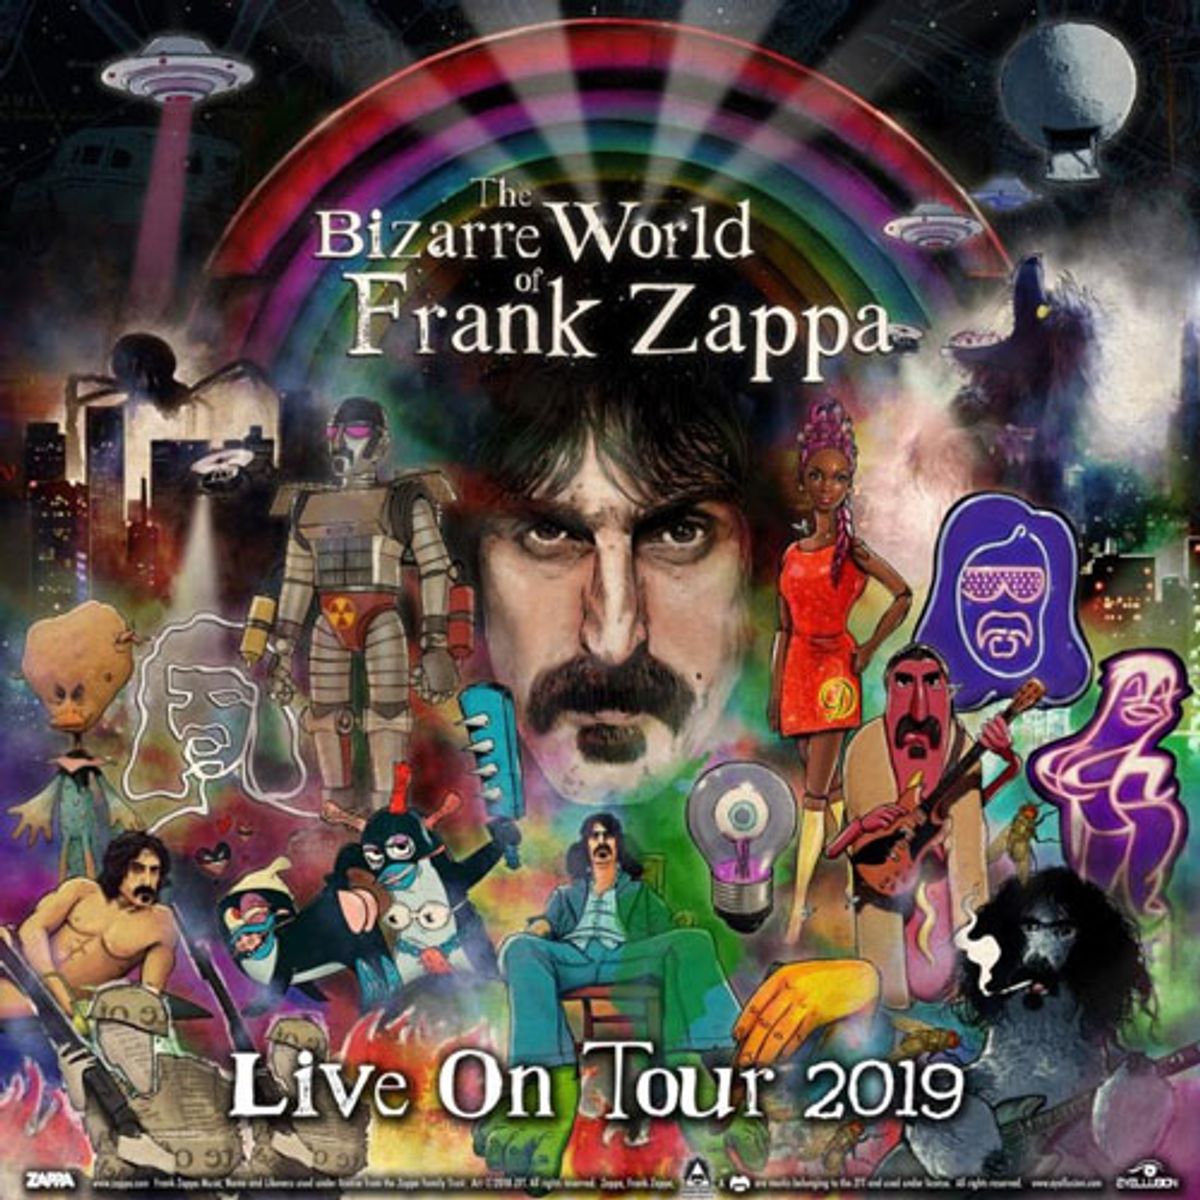 Zappa Family Trust Announces Frank Zappa Hologram Tour